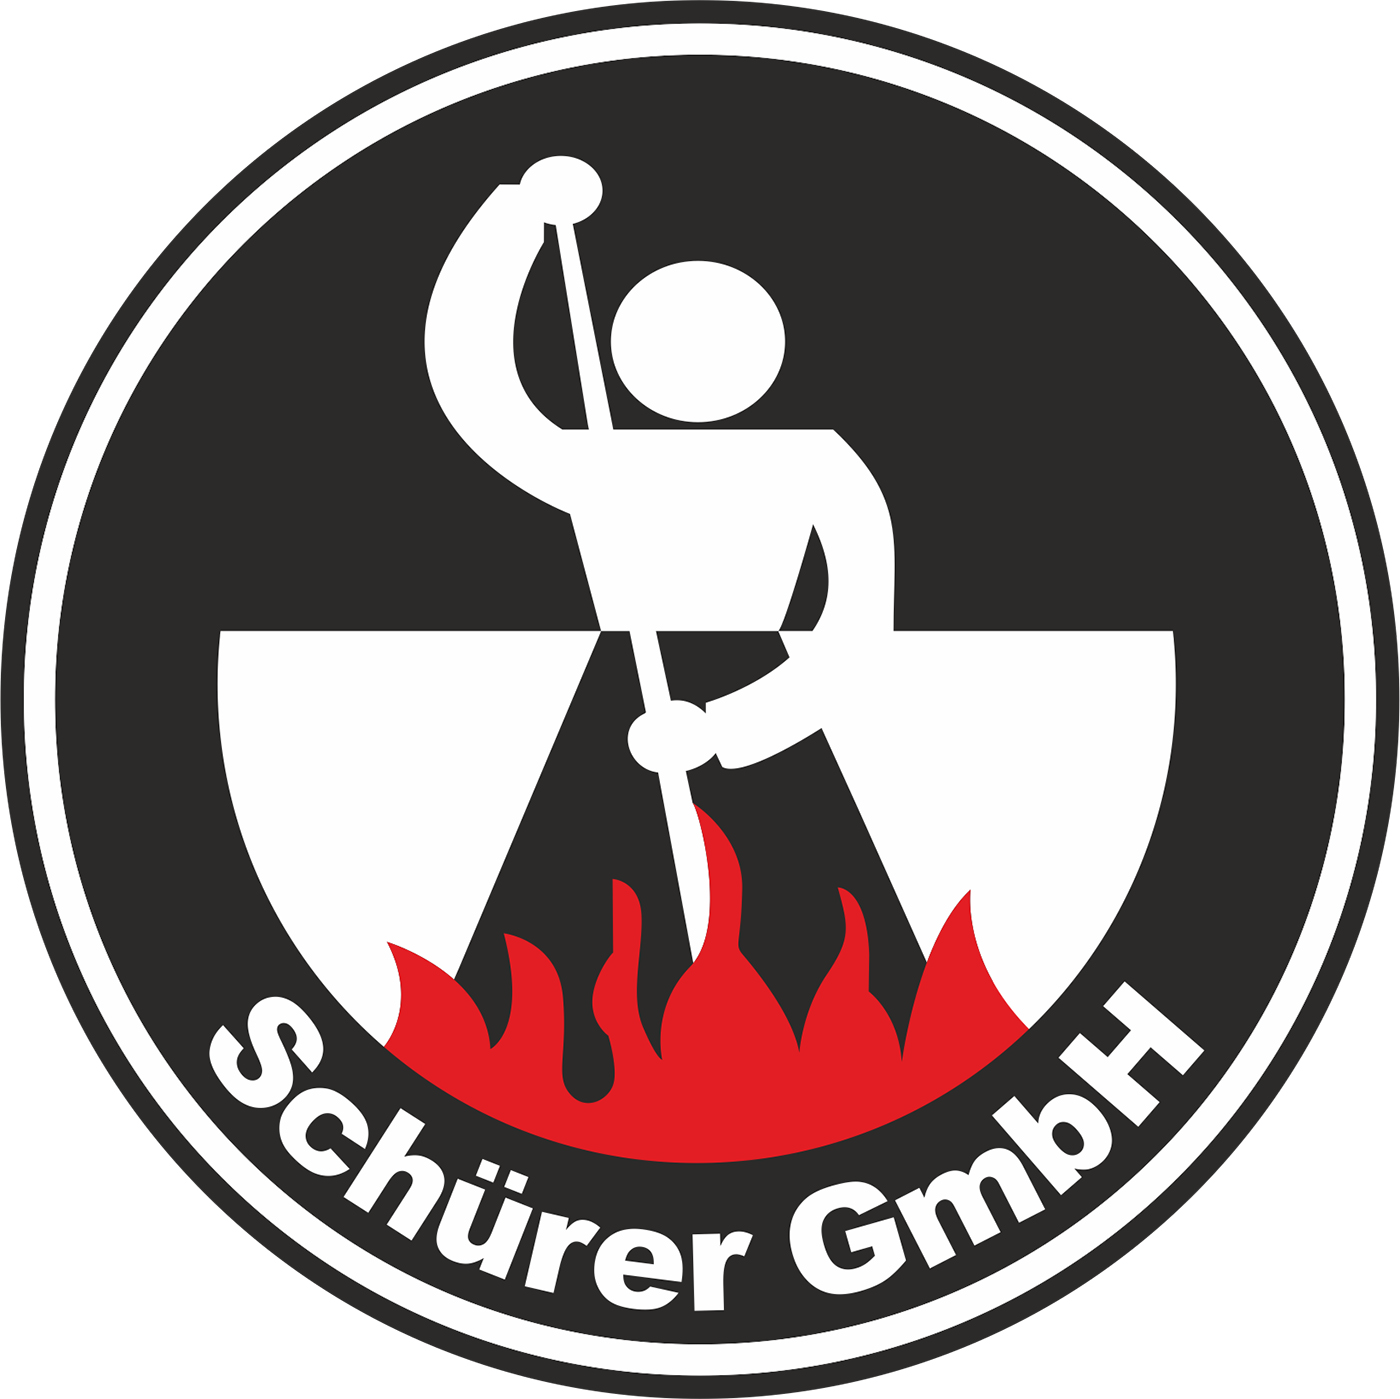 Schürer GmbH
Metallwarenfabrik